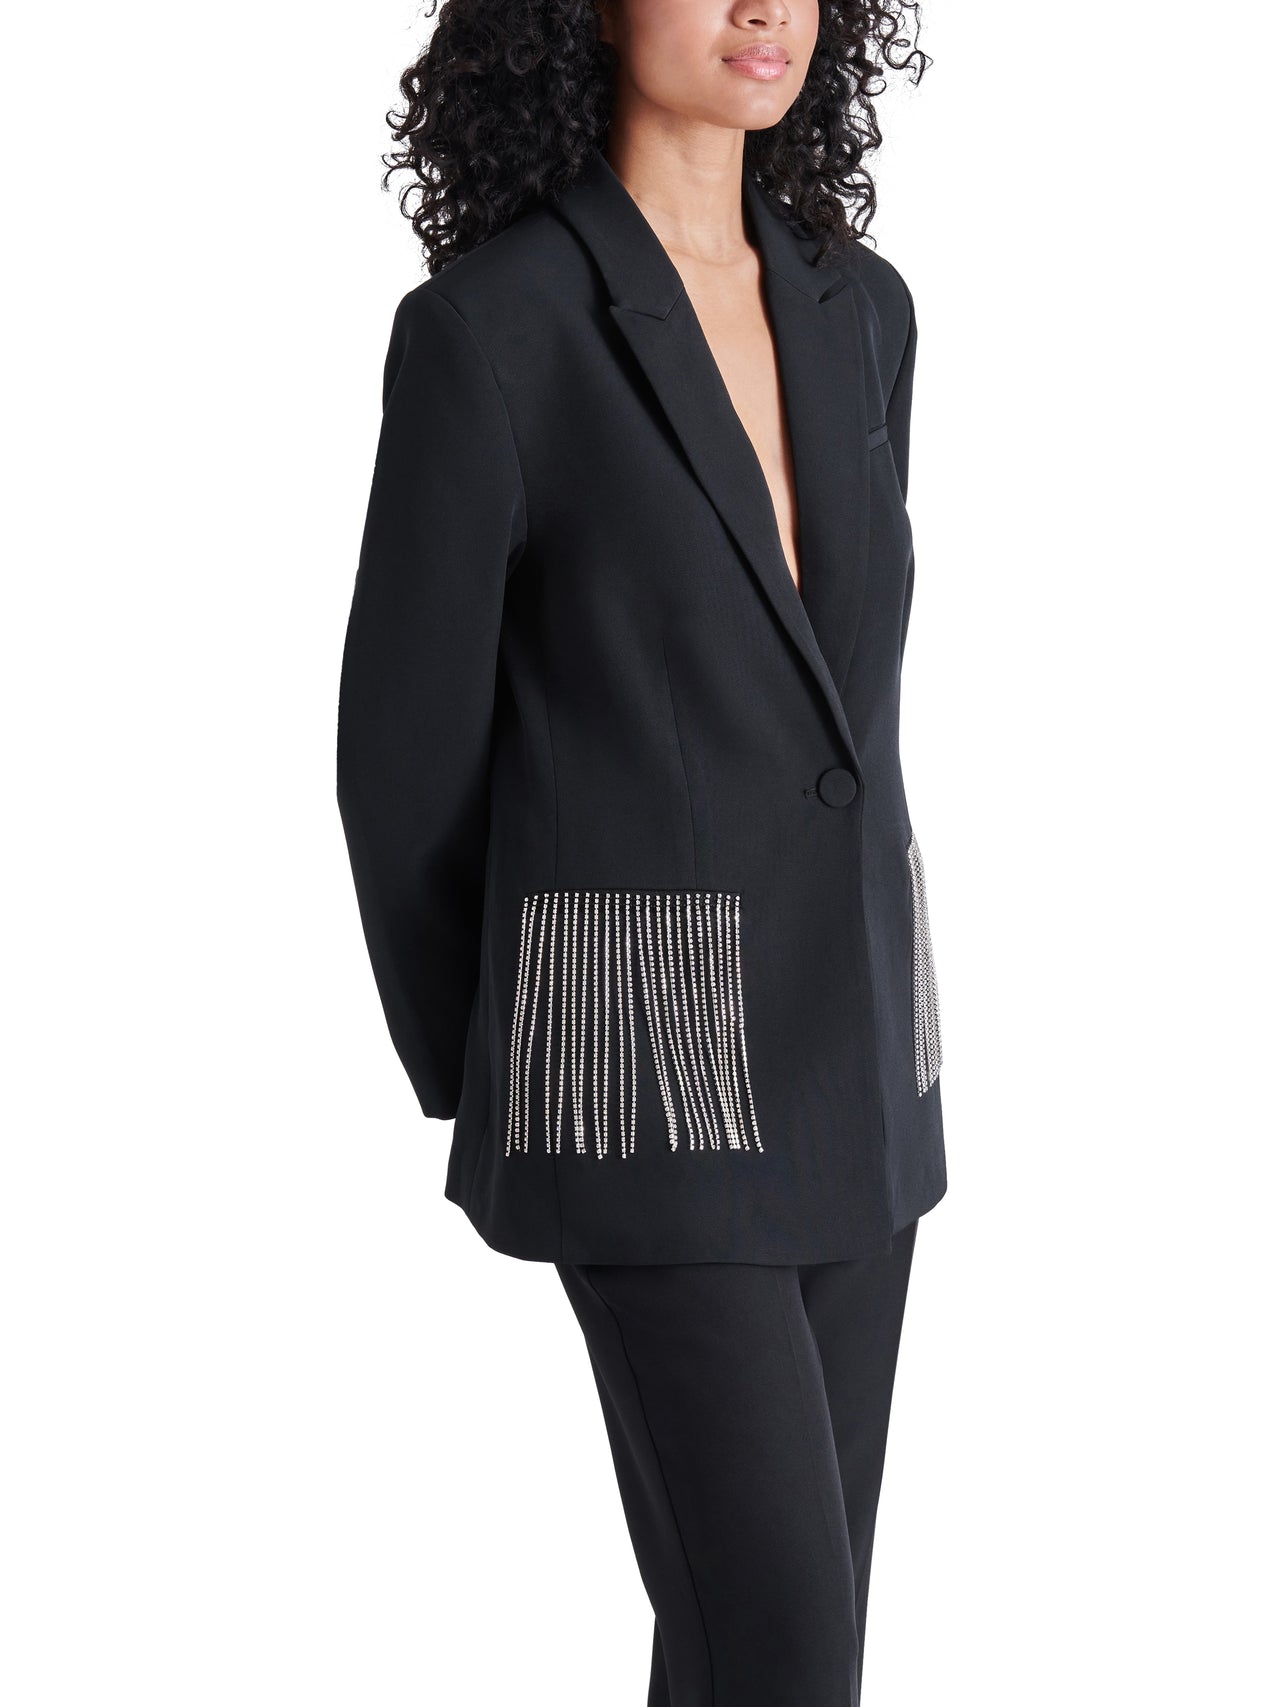 Kendra Tailored Blazer With Crystal Fringe Pockets, Jacket by Steve Madden | LIT Boutique